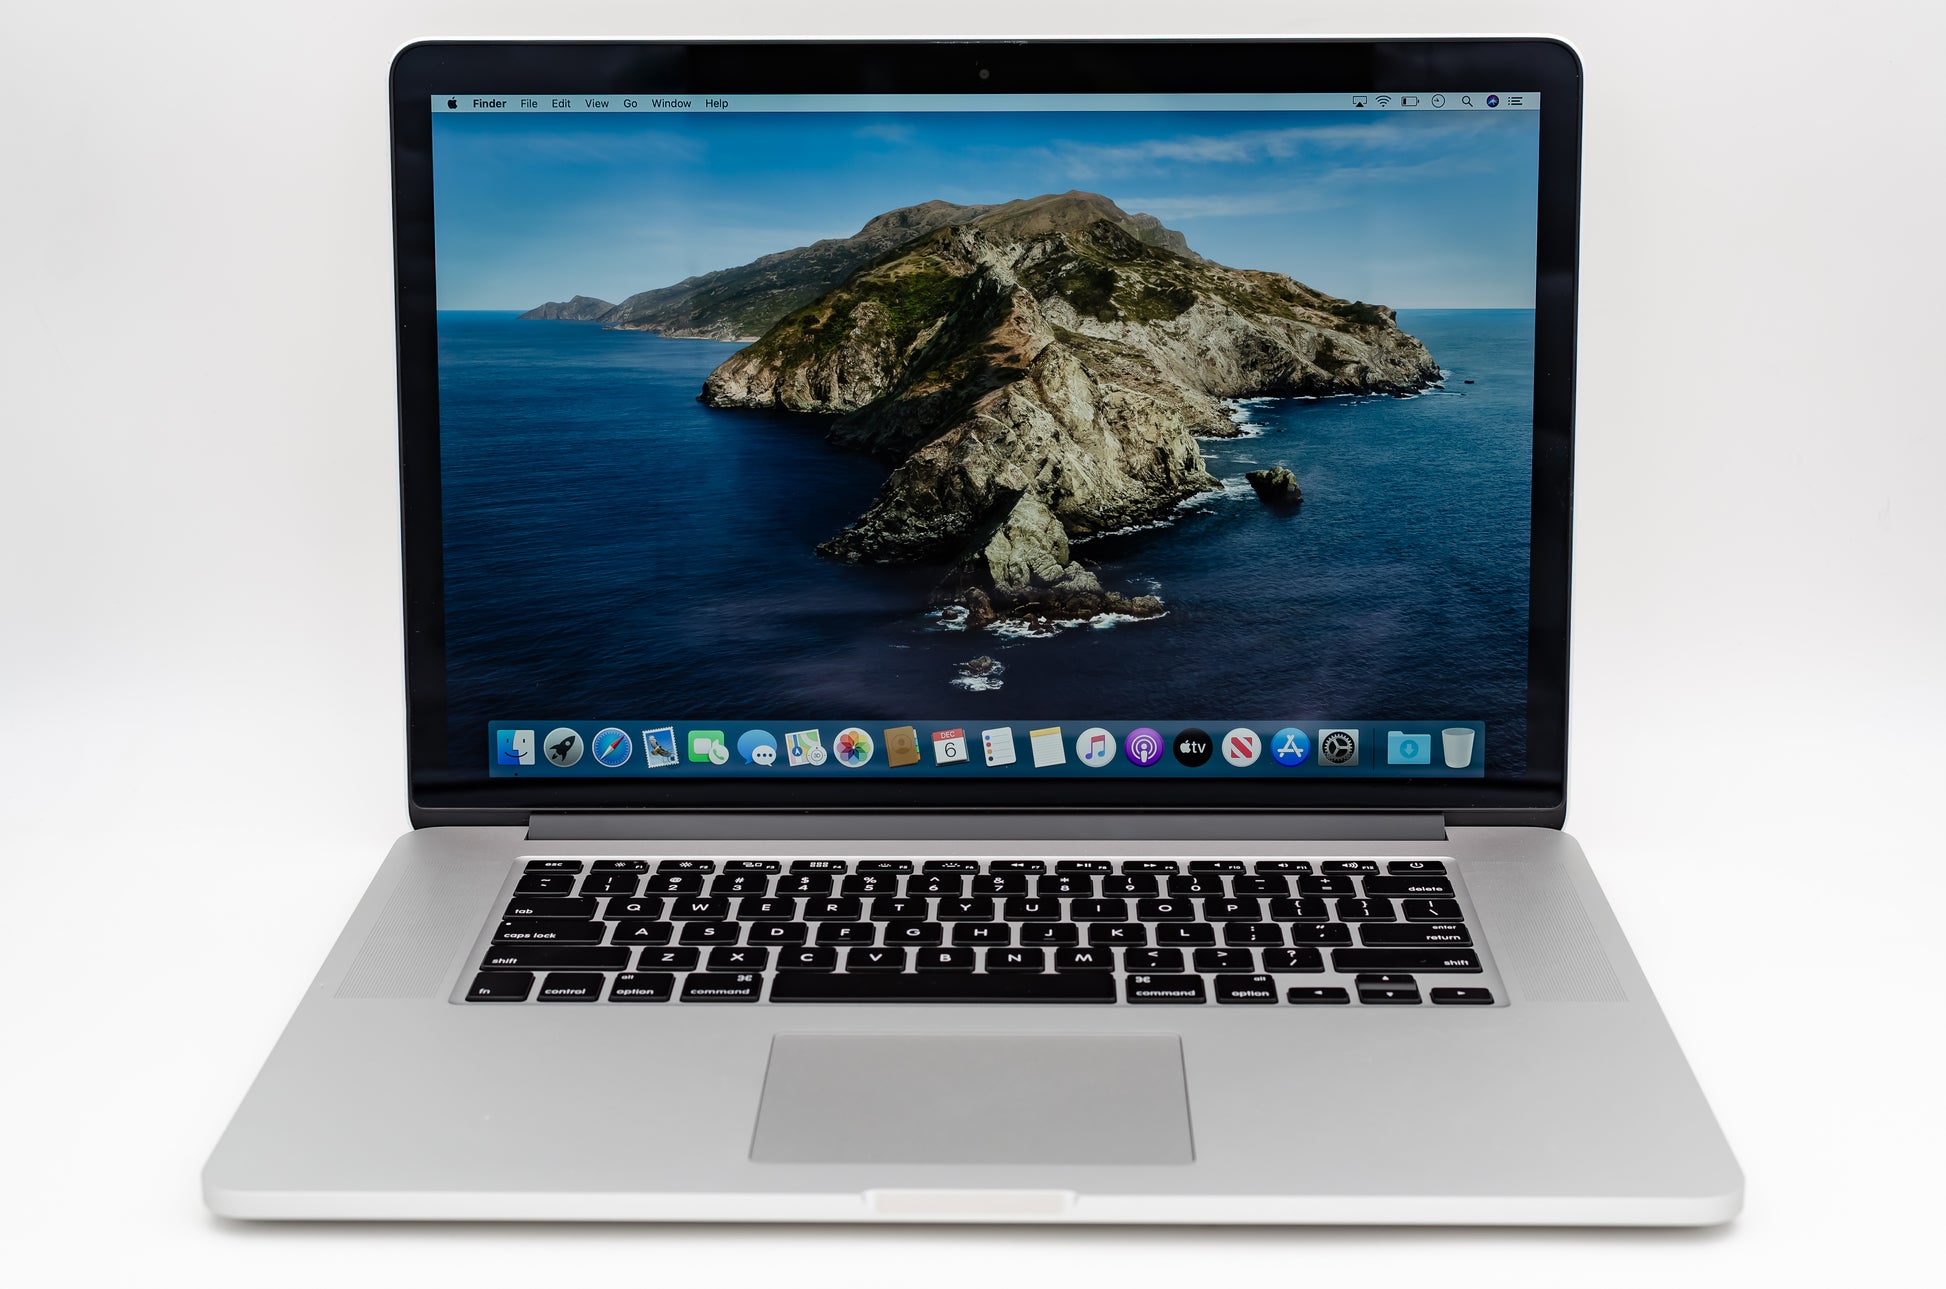 apple-early-2011-15.4-inch-macbook-pro-a1286-aluminum-qci7 - 2ghz processor, 4gb ram, hd 6490m - 256mb gpu-mc721ll/a-1